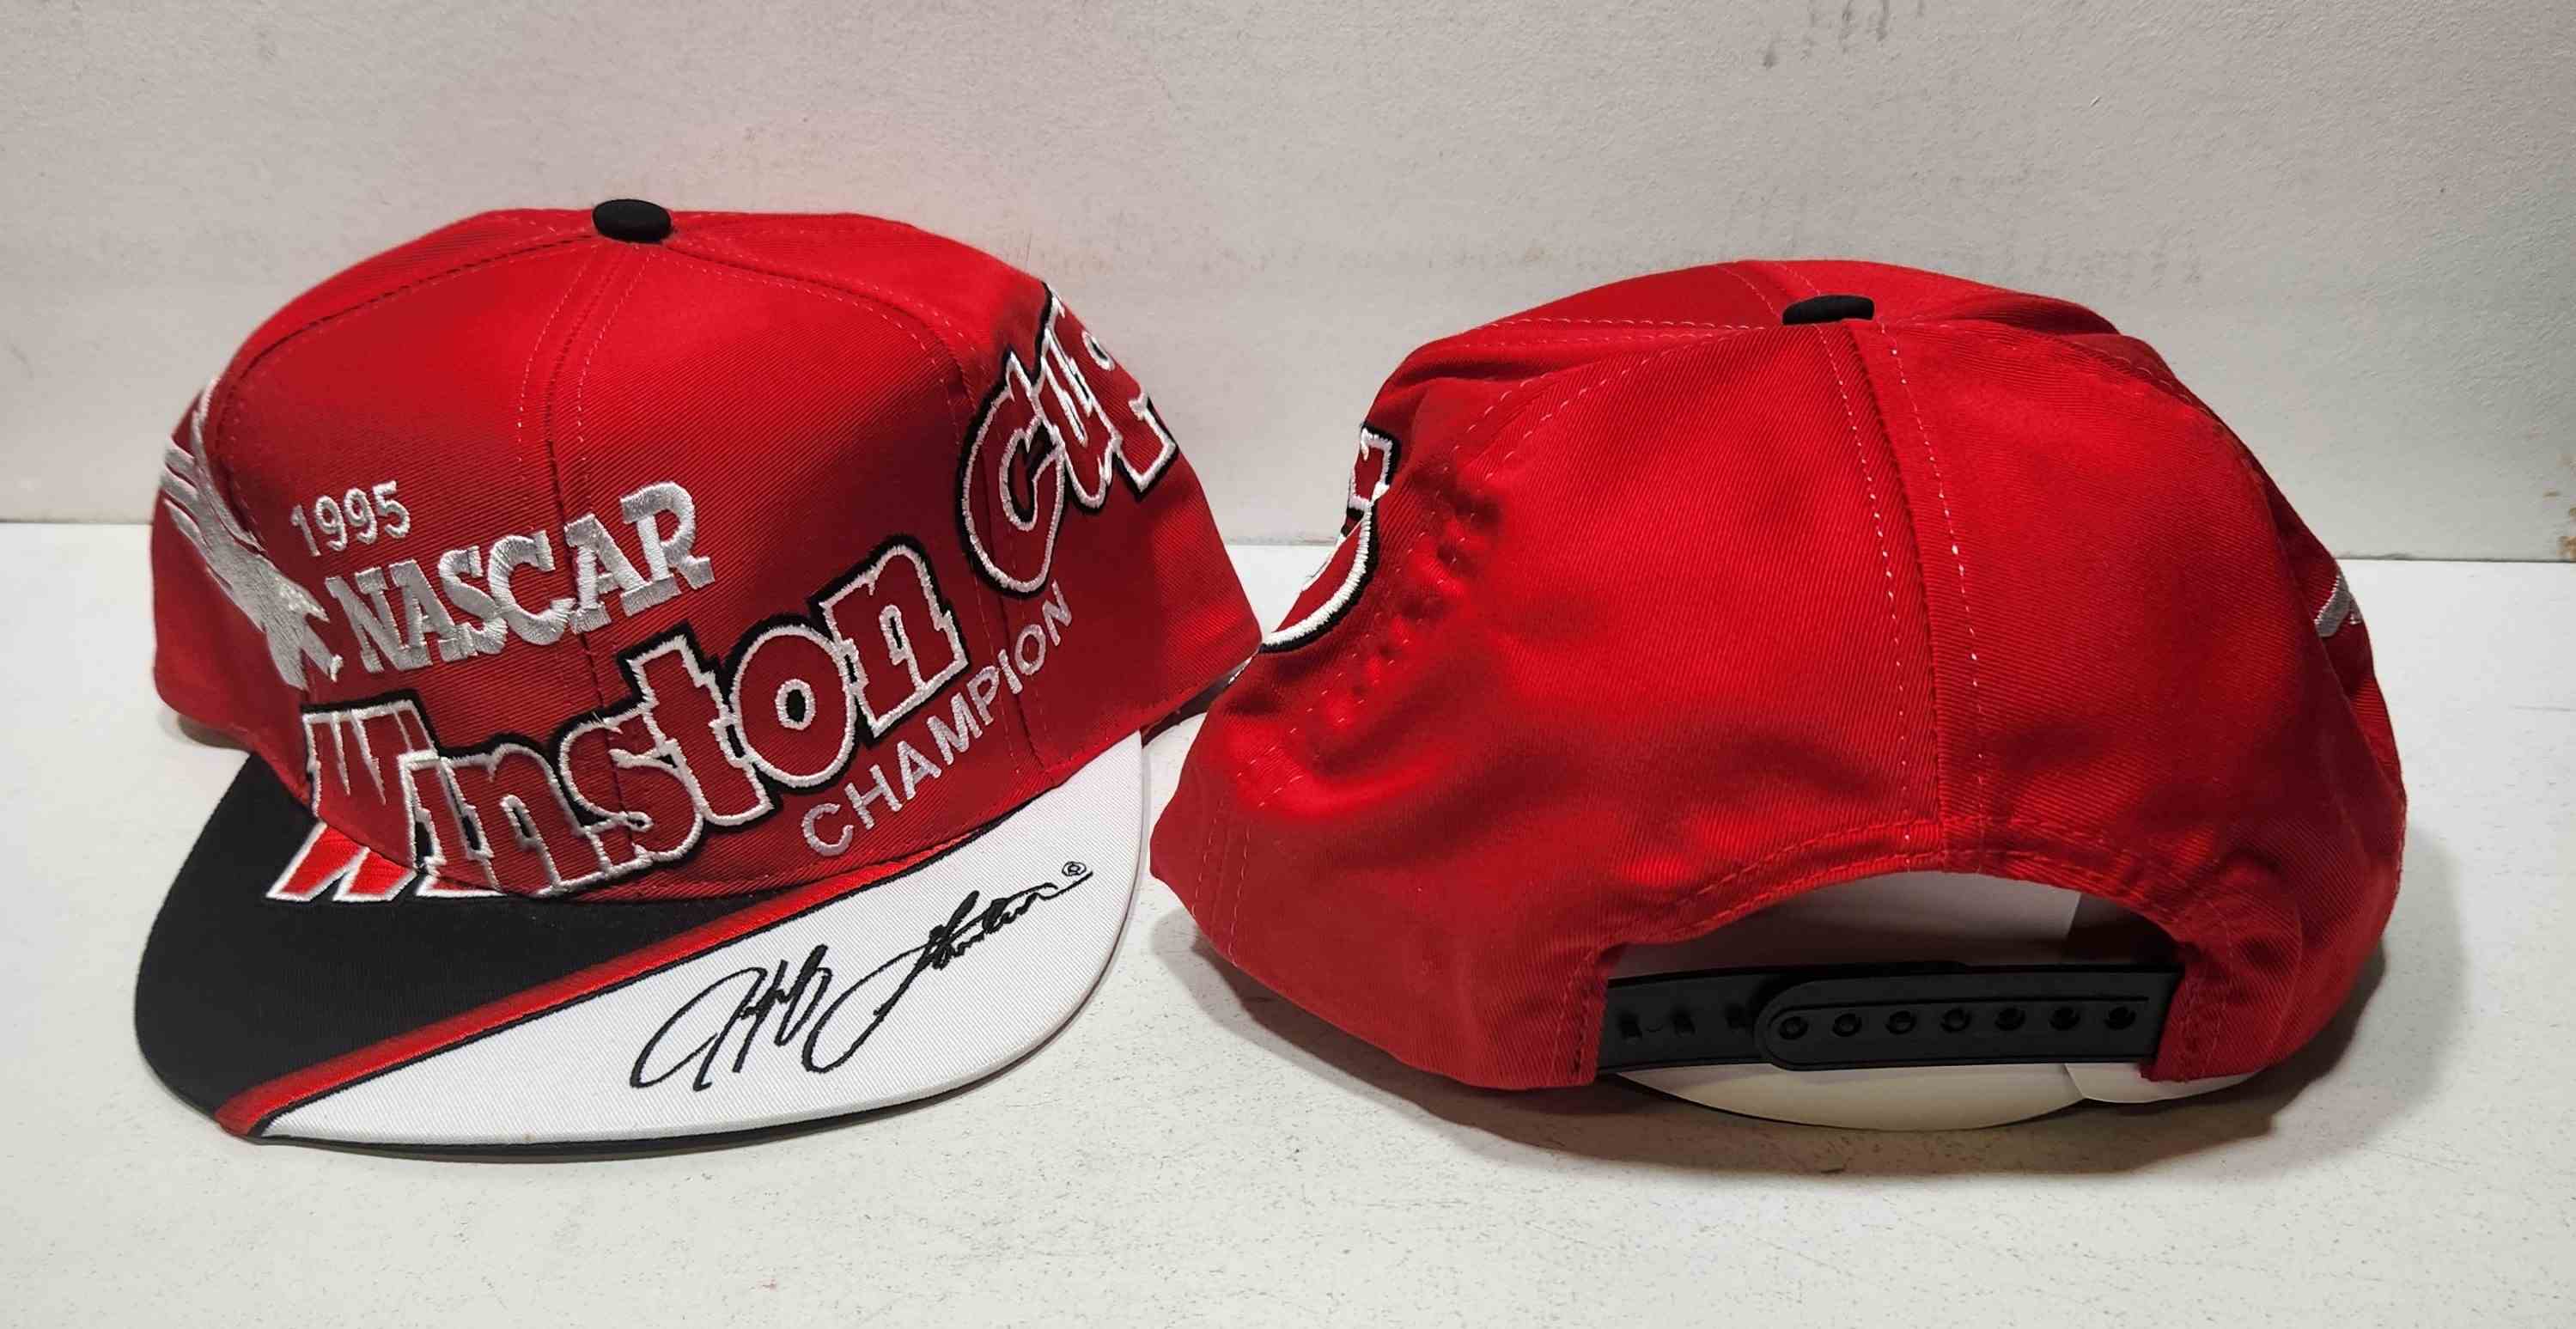 1995 Jeff Gordon Dupont "Winston Cup Champion" hat